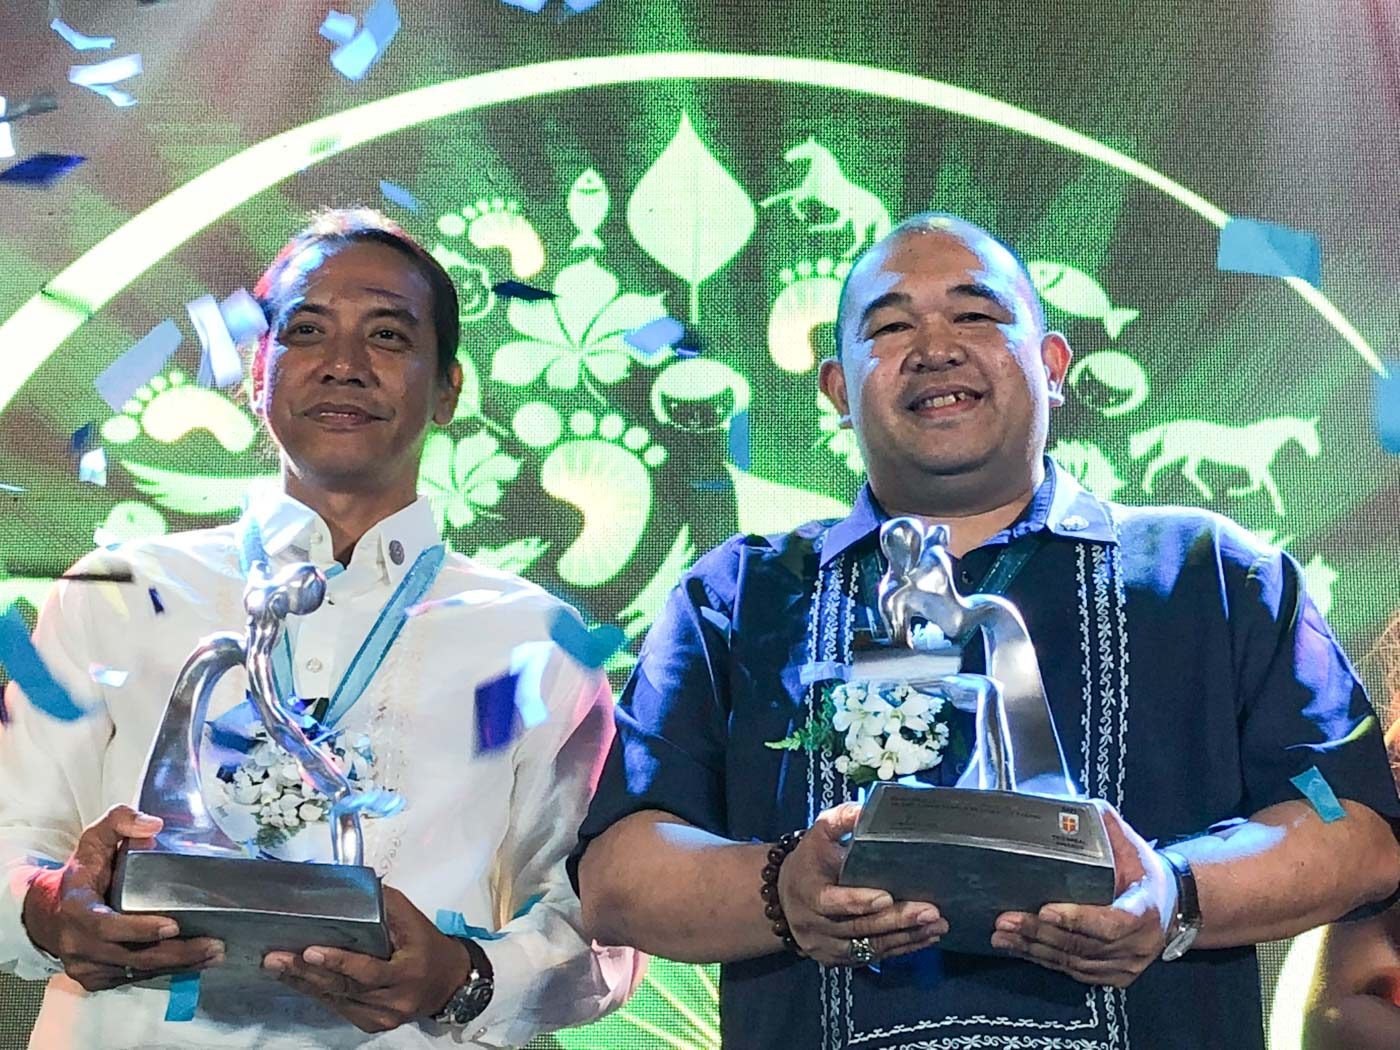 Missionary doctor, PH Eagle Foundation win 2018 Aboitiz awards